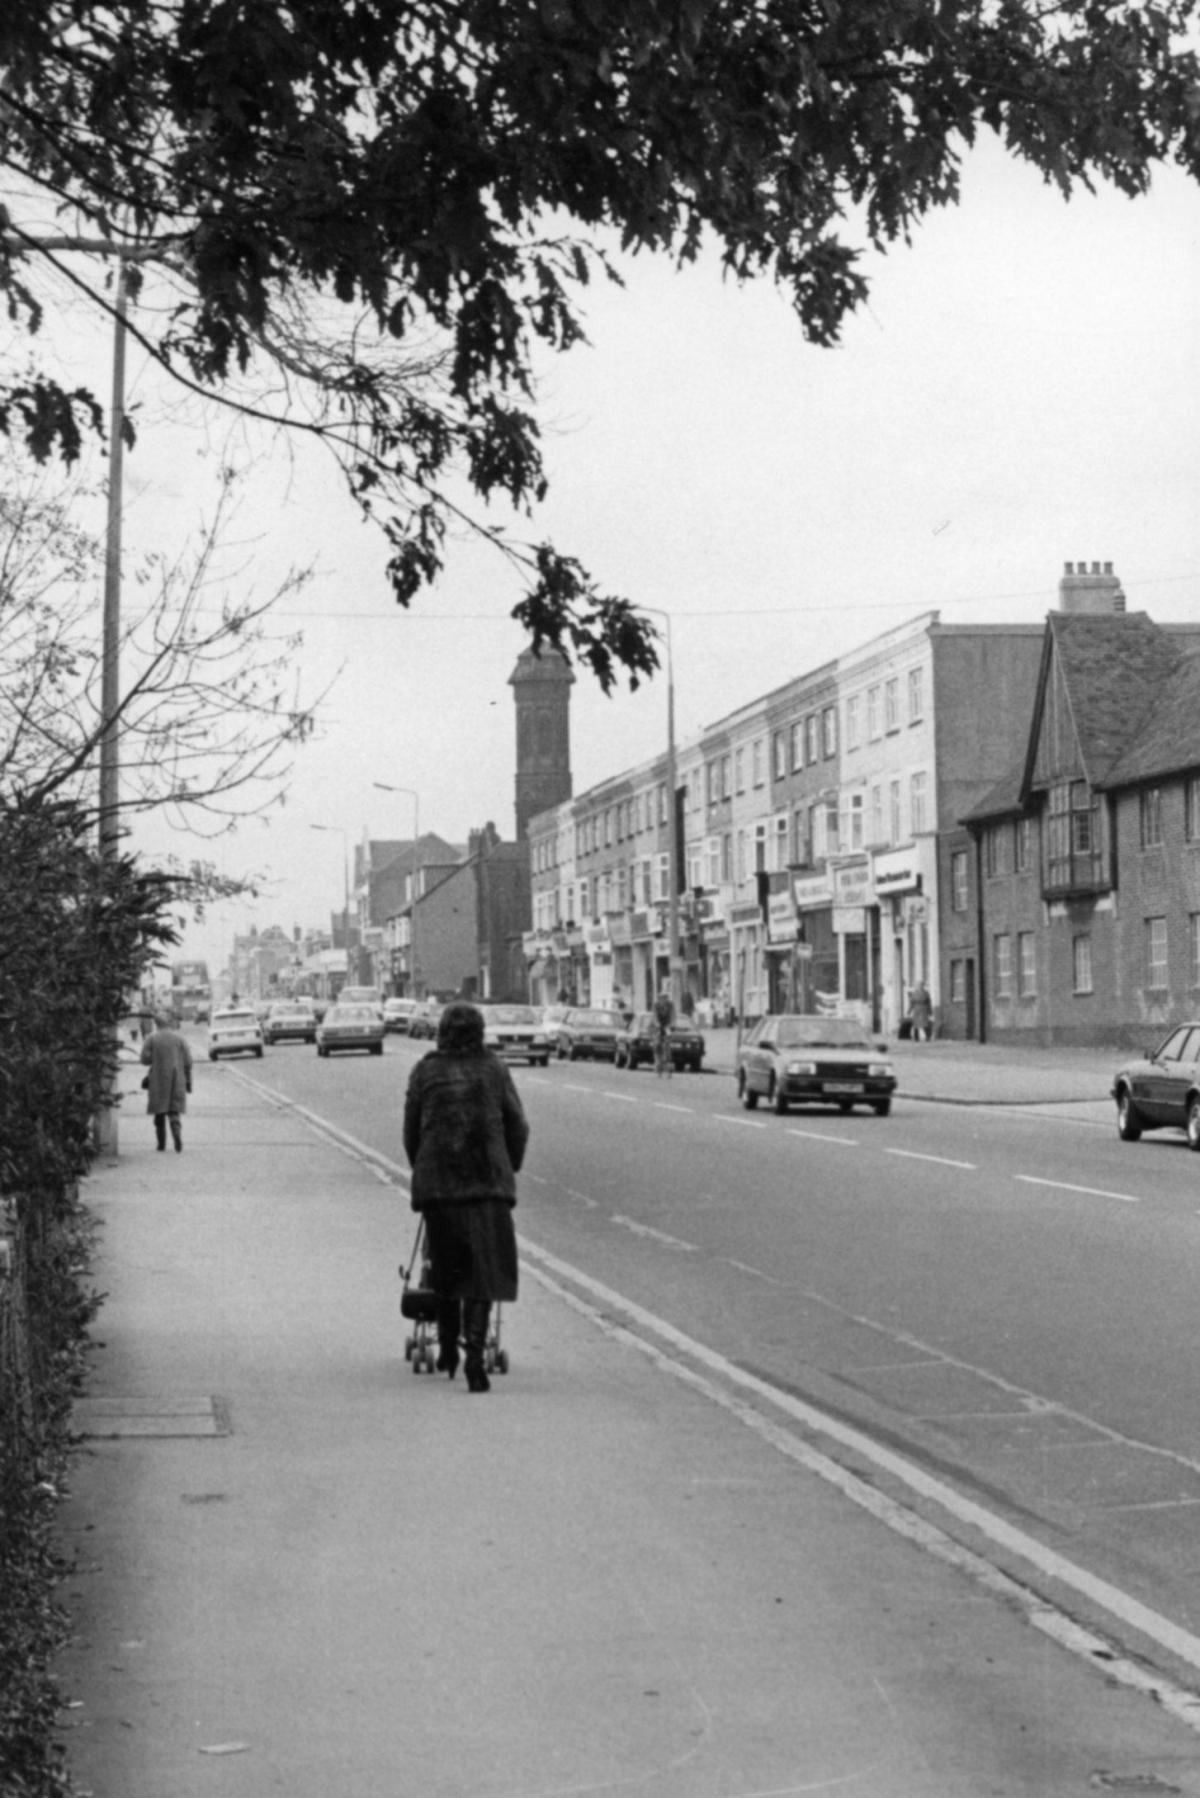 Shirley High Street in 1983.